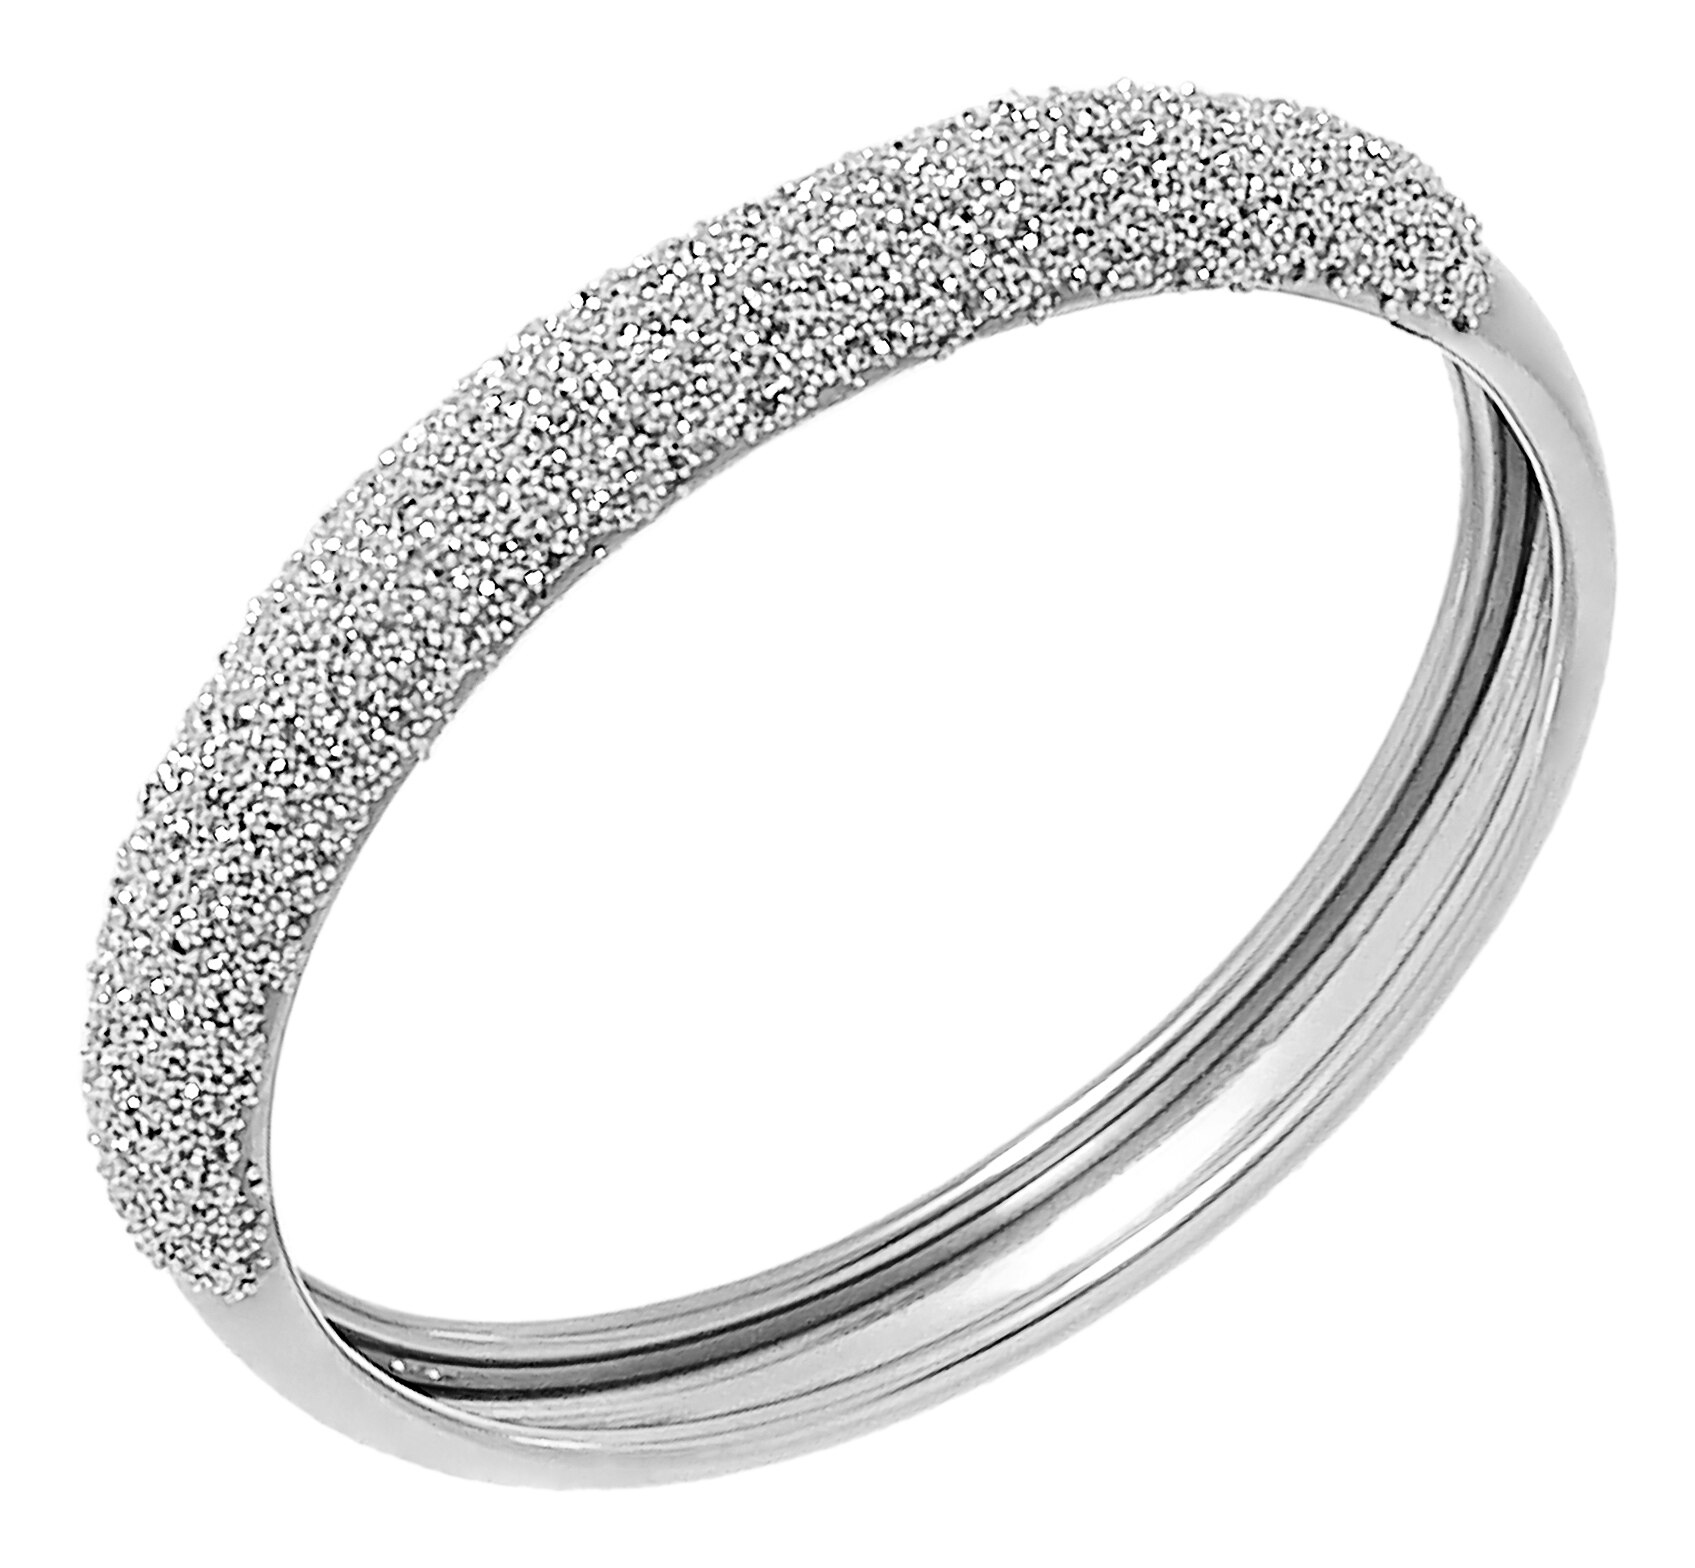 Diamond Dust Rings: Sparkling Elegance in Every Grain | Diamond Registry